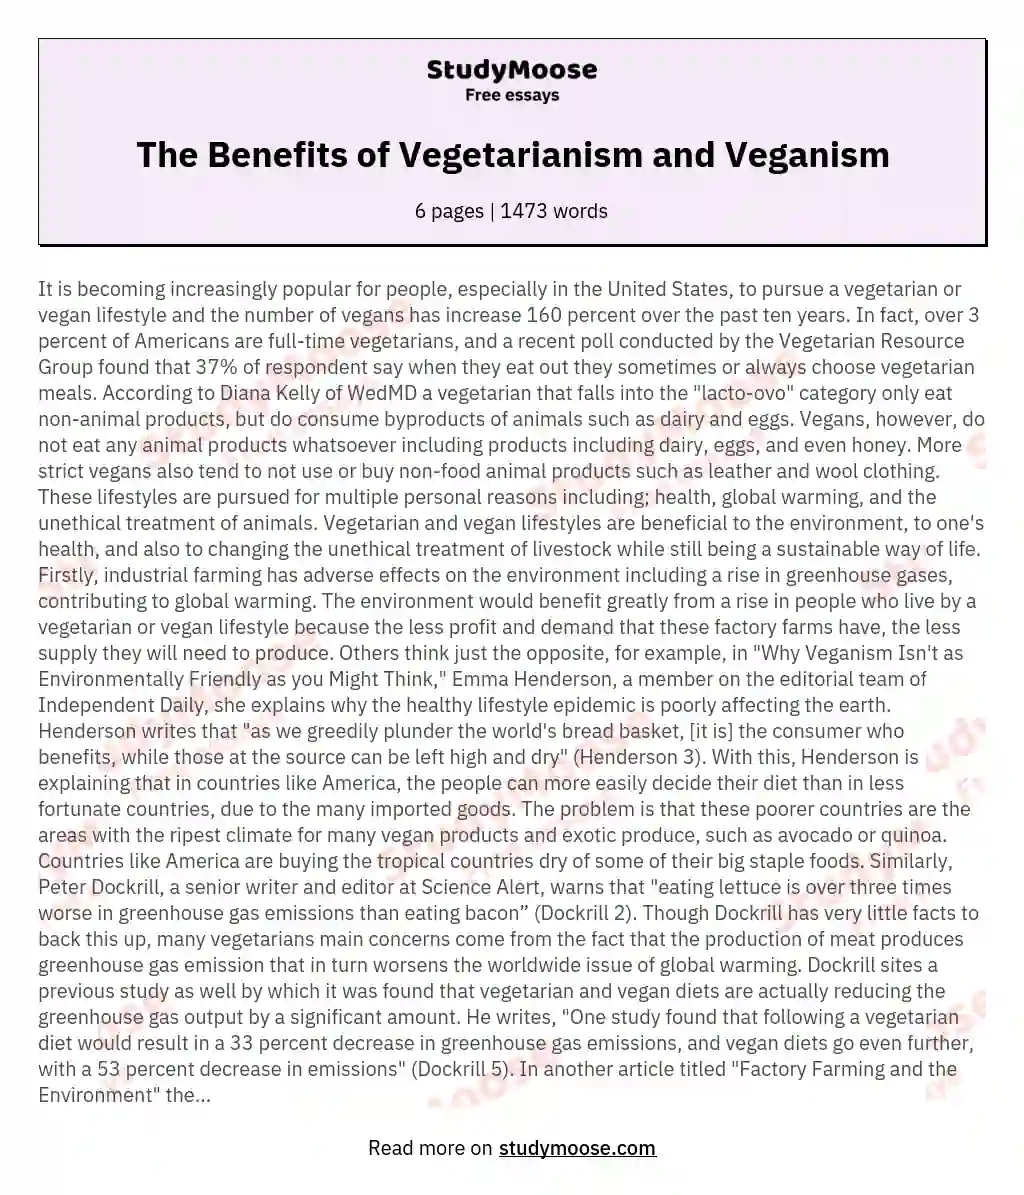 The Benefits of Vegetarianism and Veganism essay